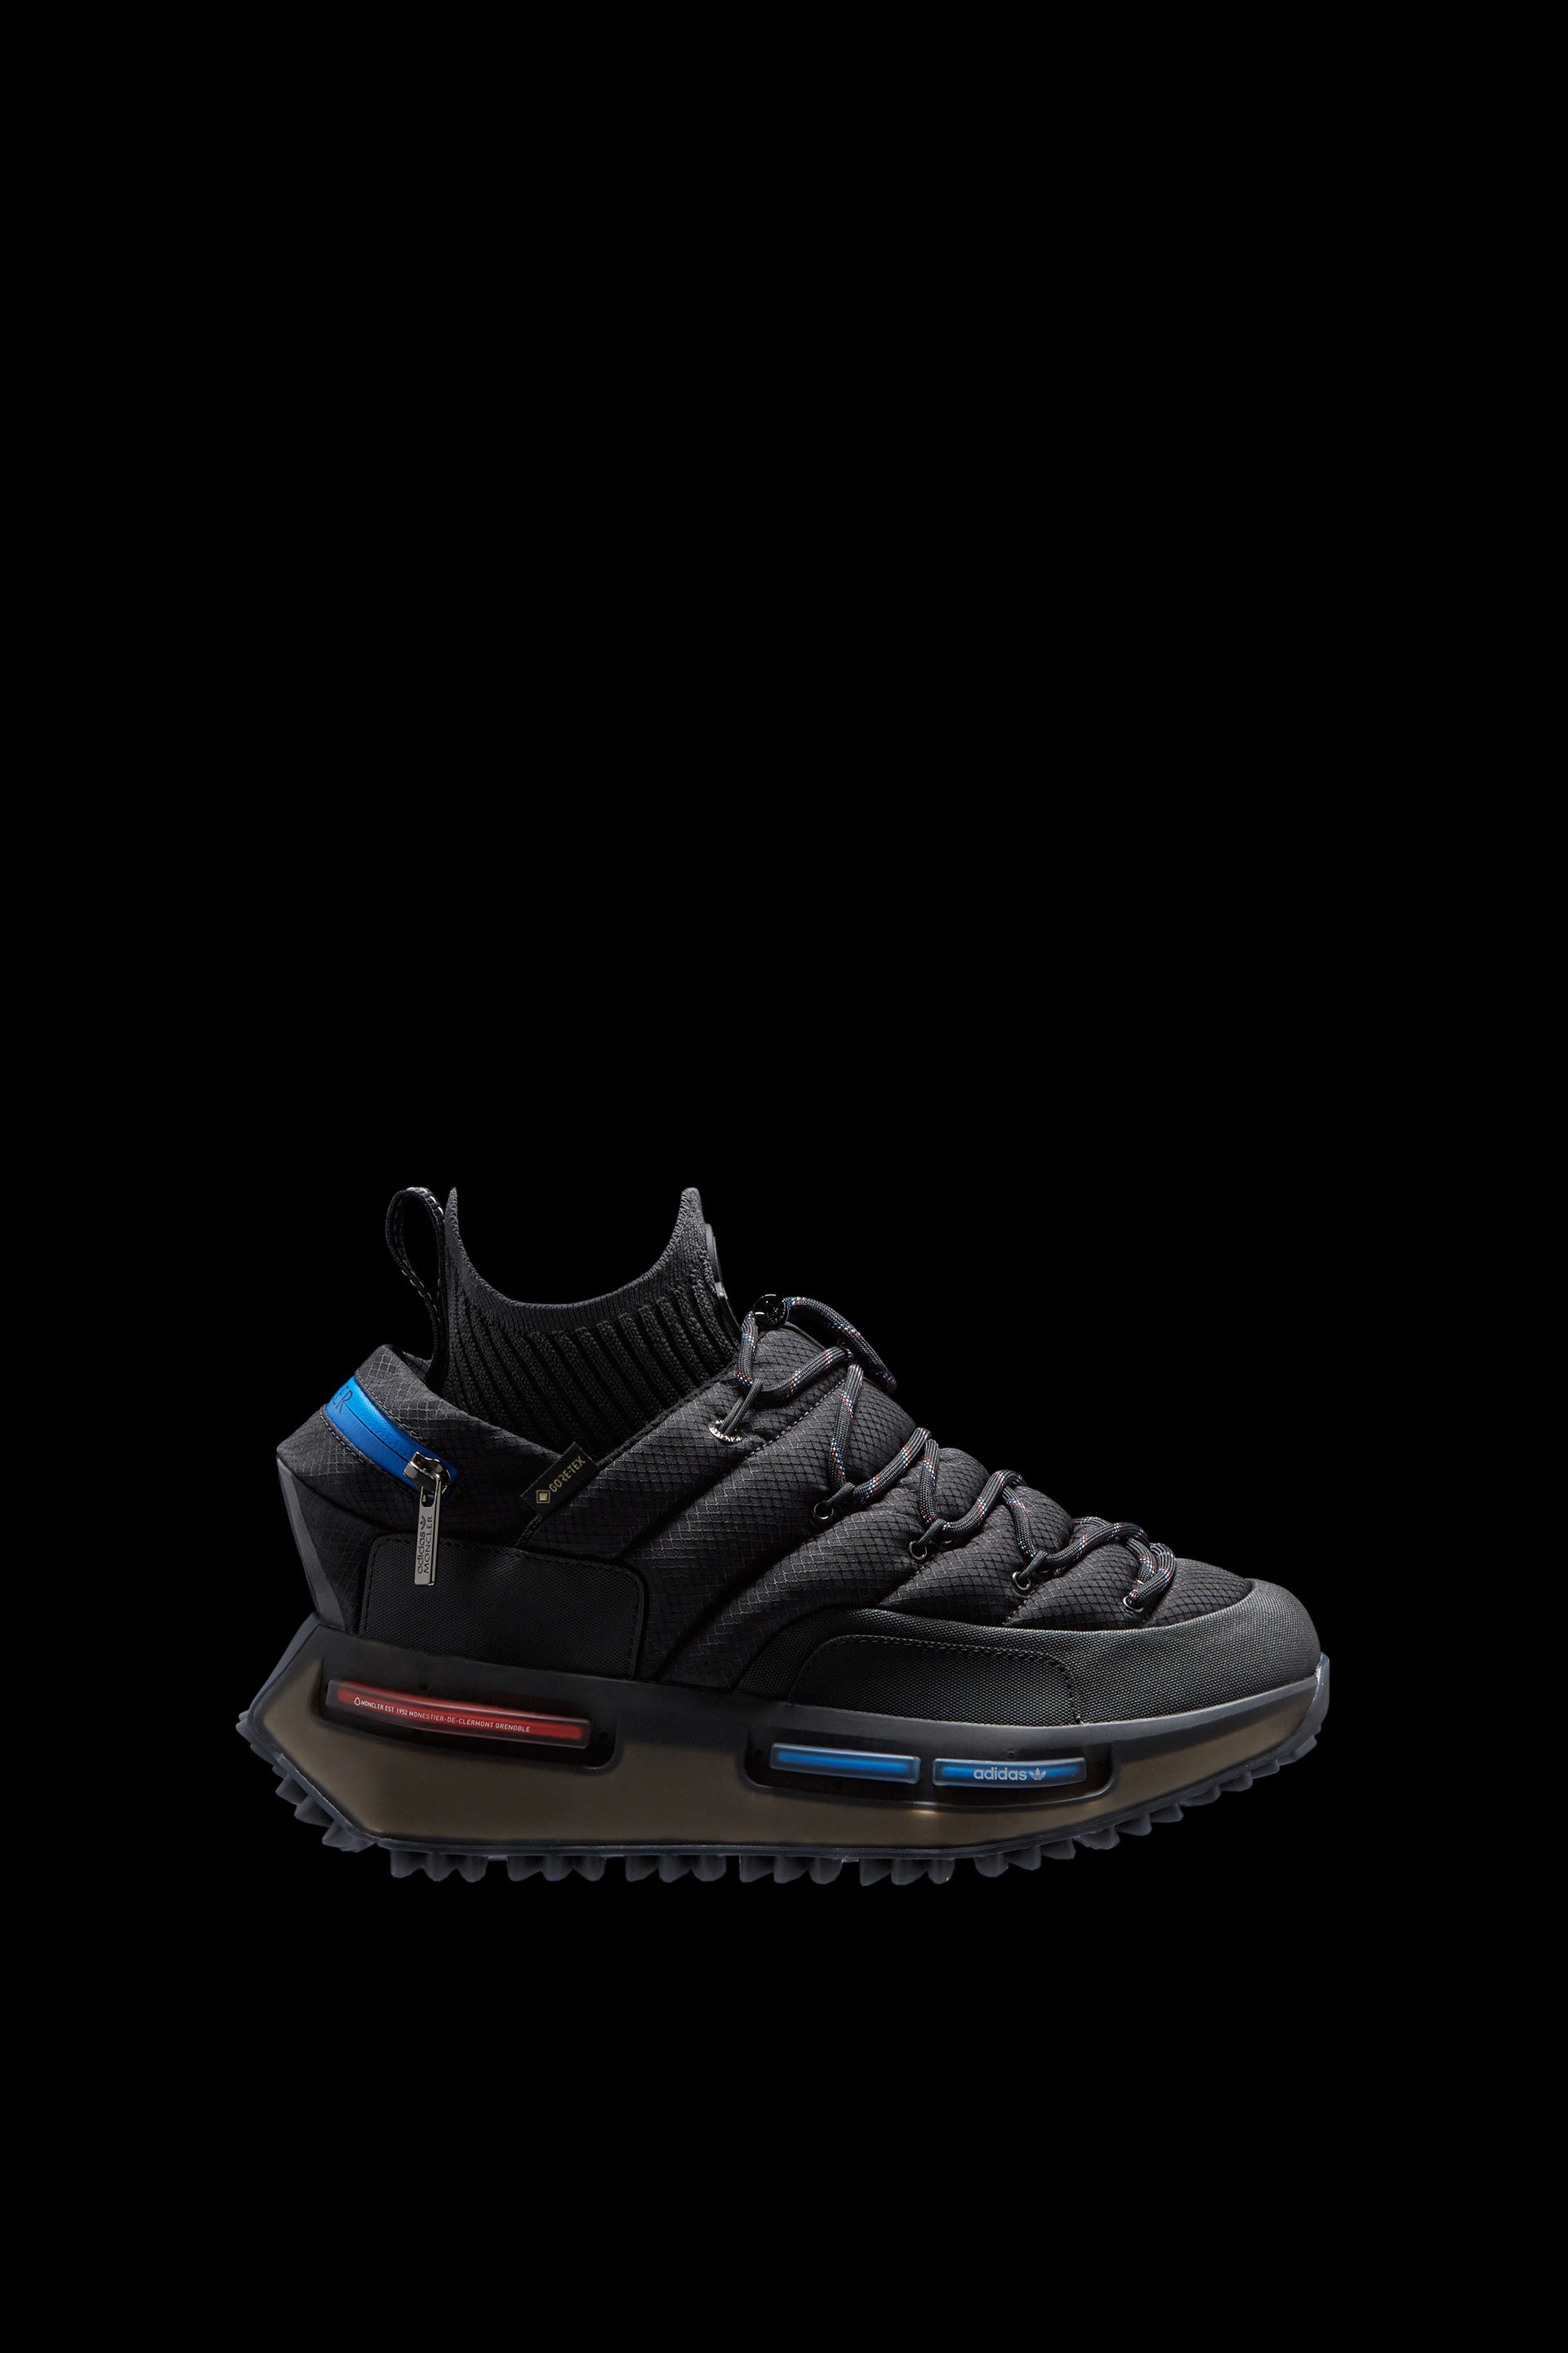 Moncler NMD Runner Sneakers - 1